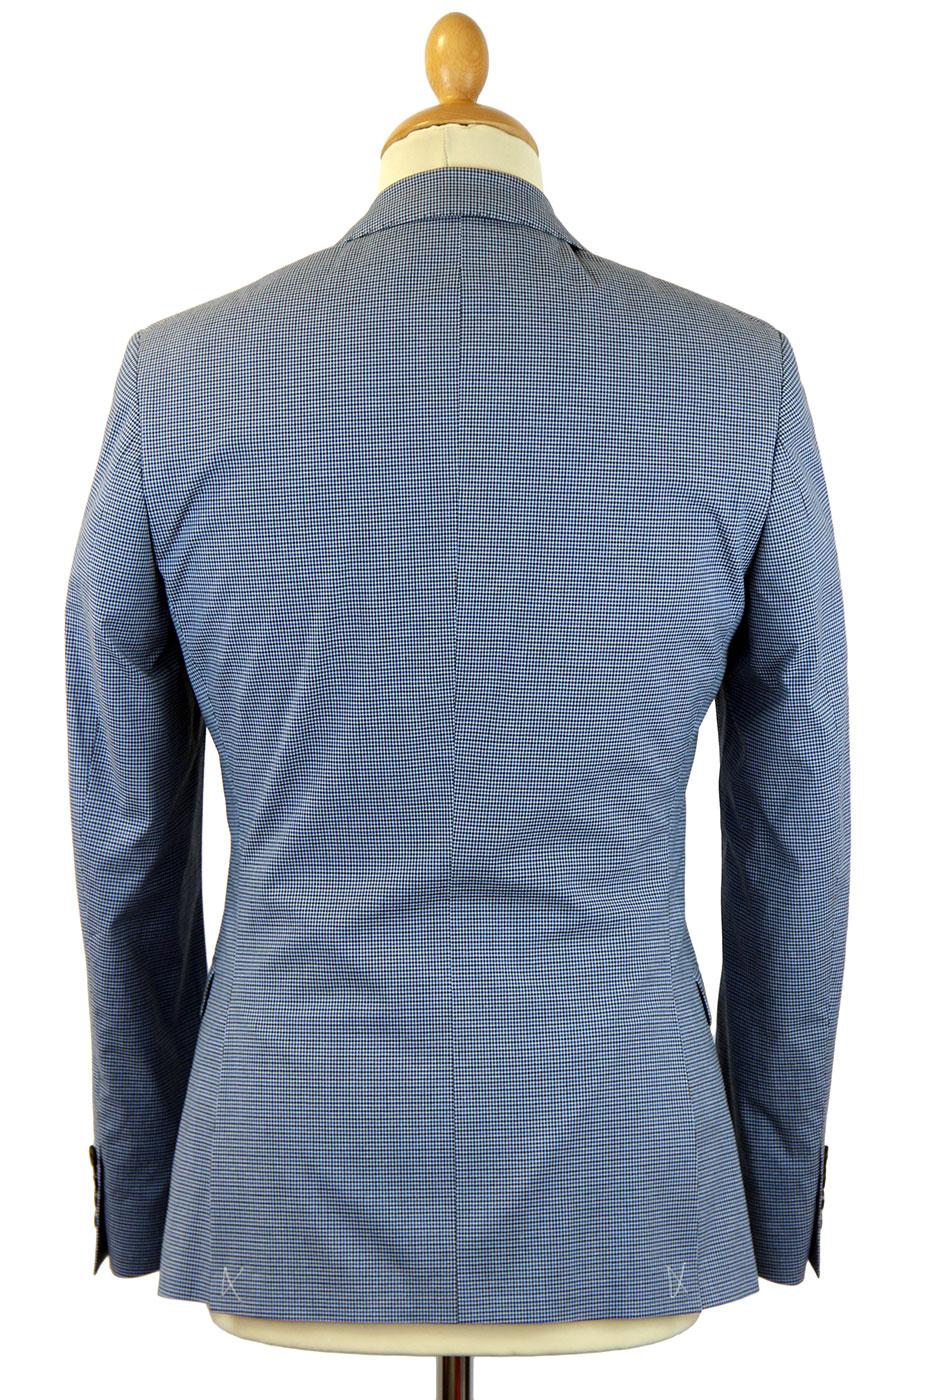 Ben Shermen Tailoring Mod Micro Check Suit in Nightshadow Blue